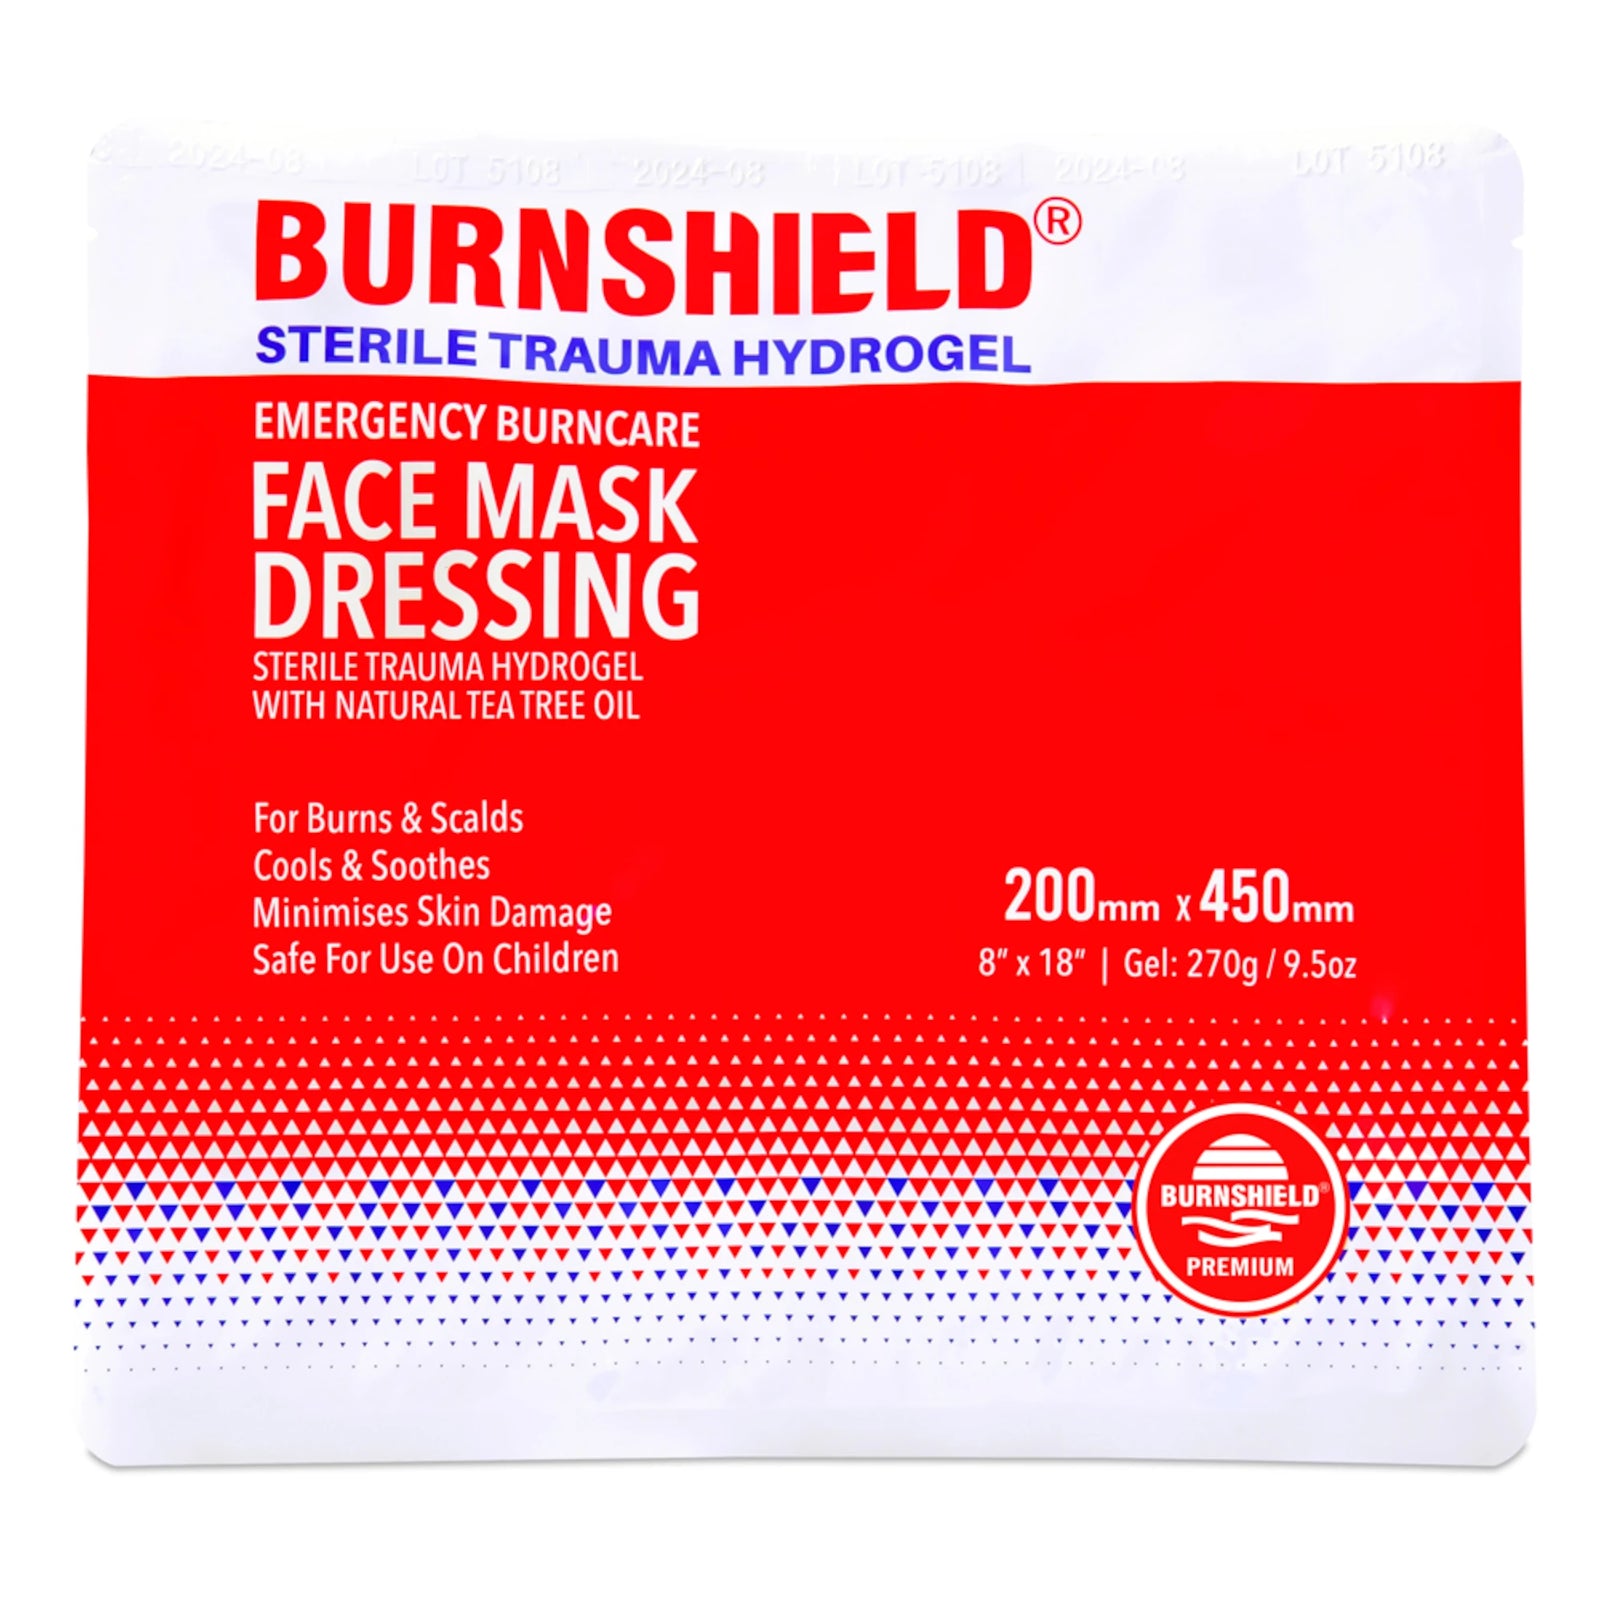 burnshield face mask dressing 200 x 450 mm